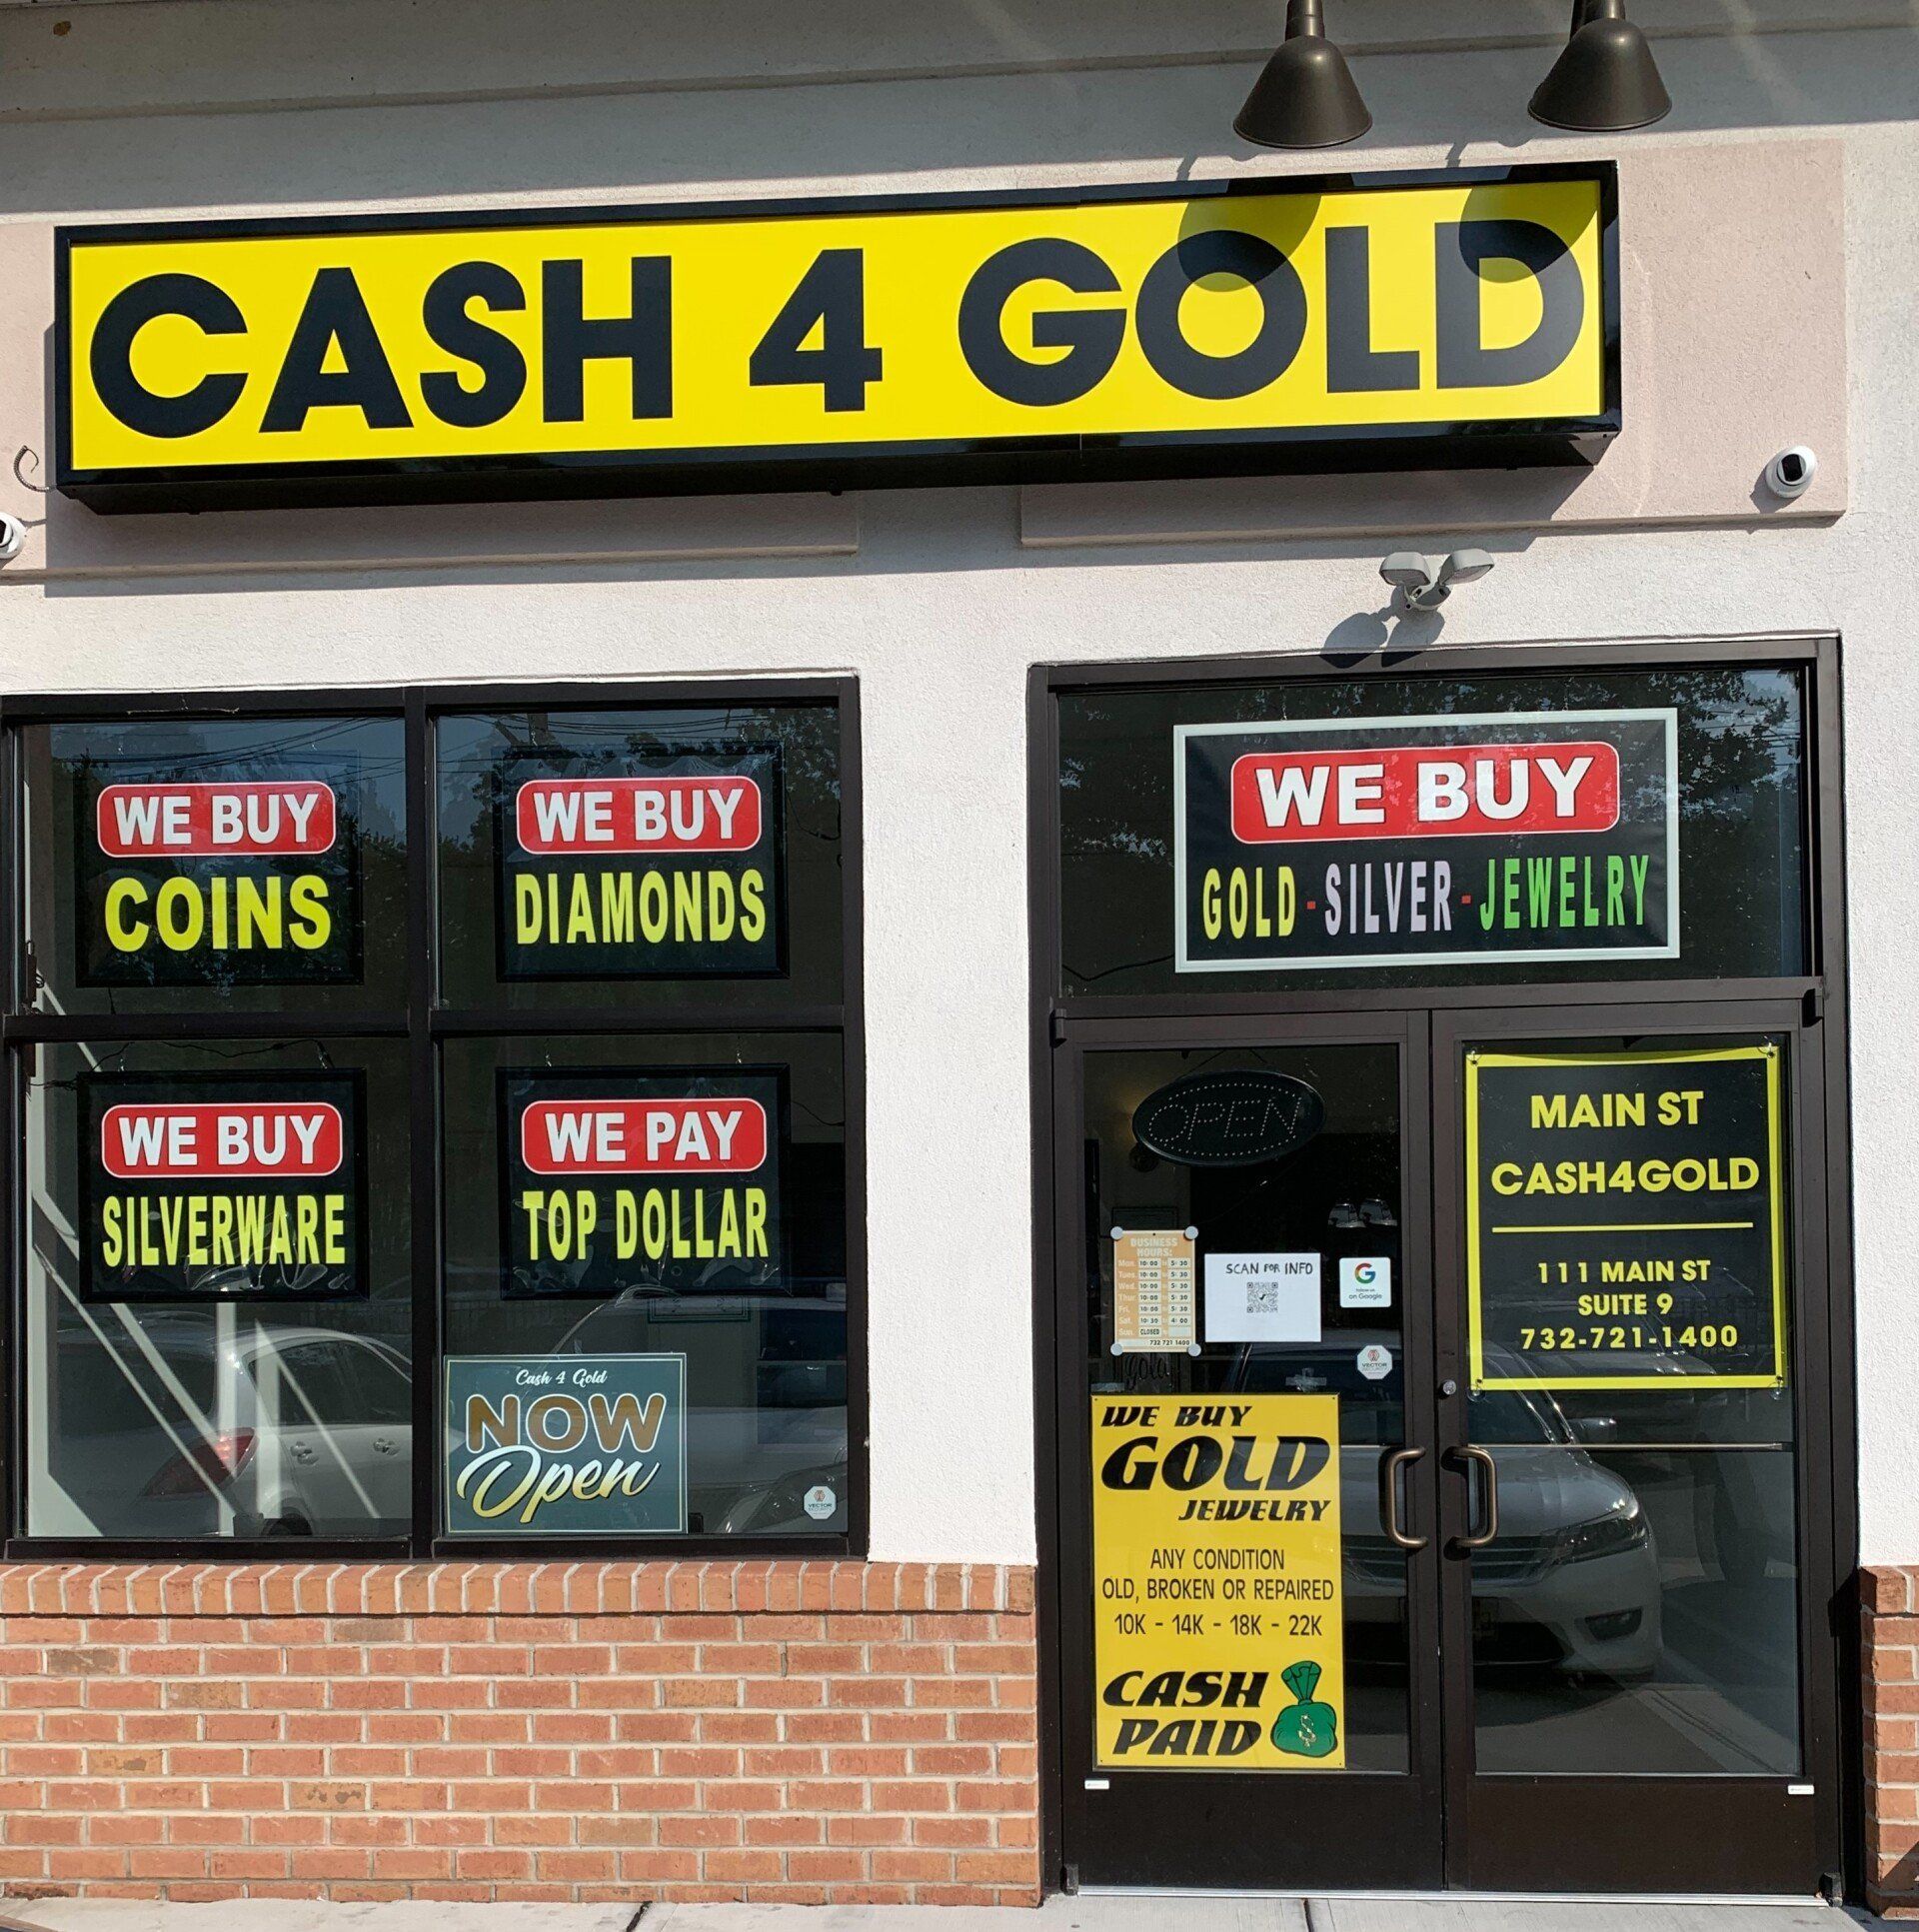 Main Cash 4 Gold in East Brunswick, NJ - Photo of Exterior Signage